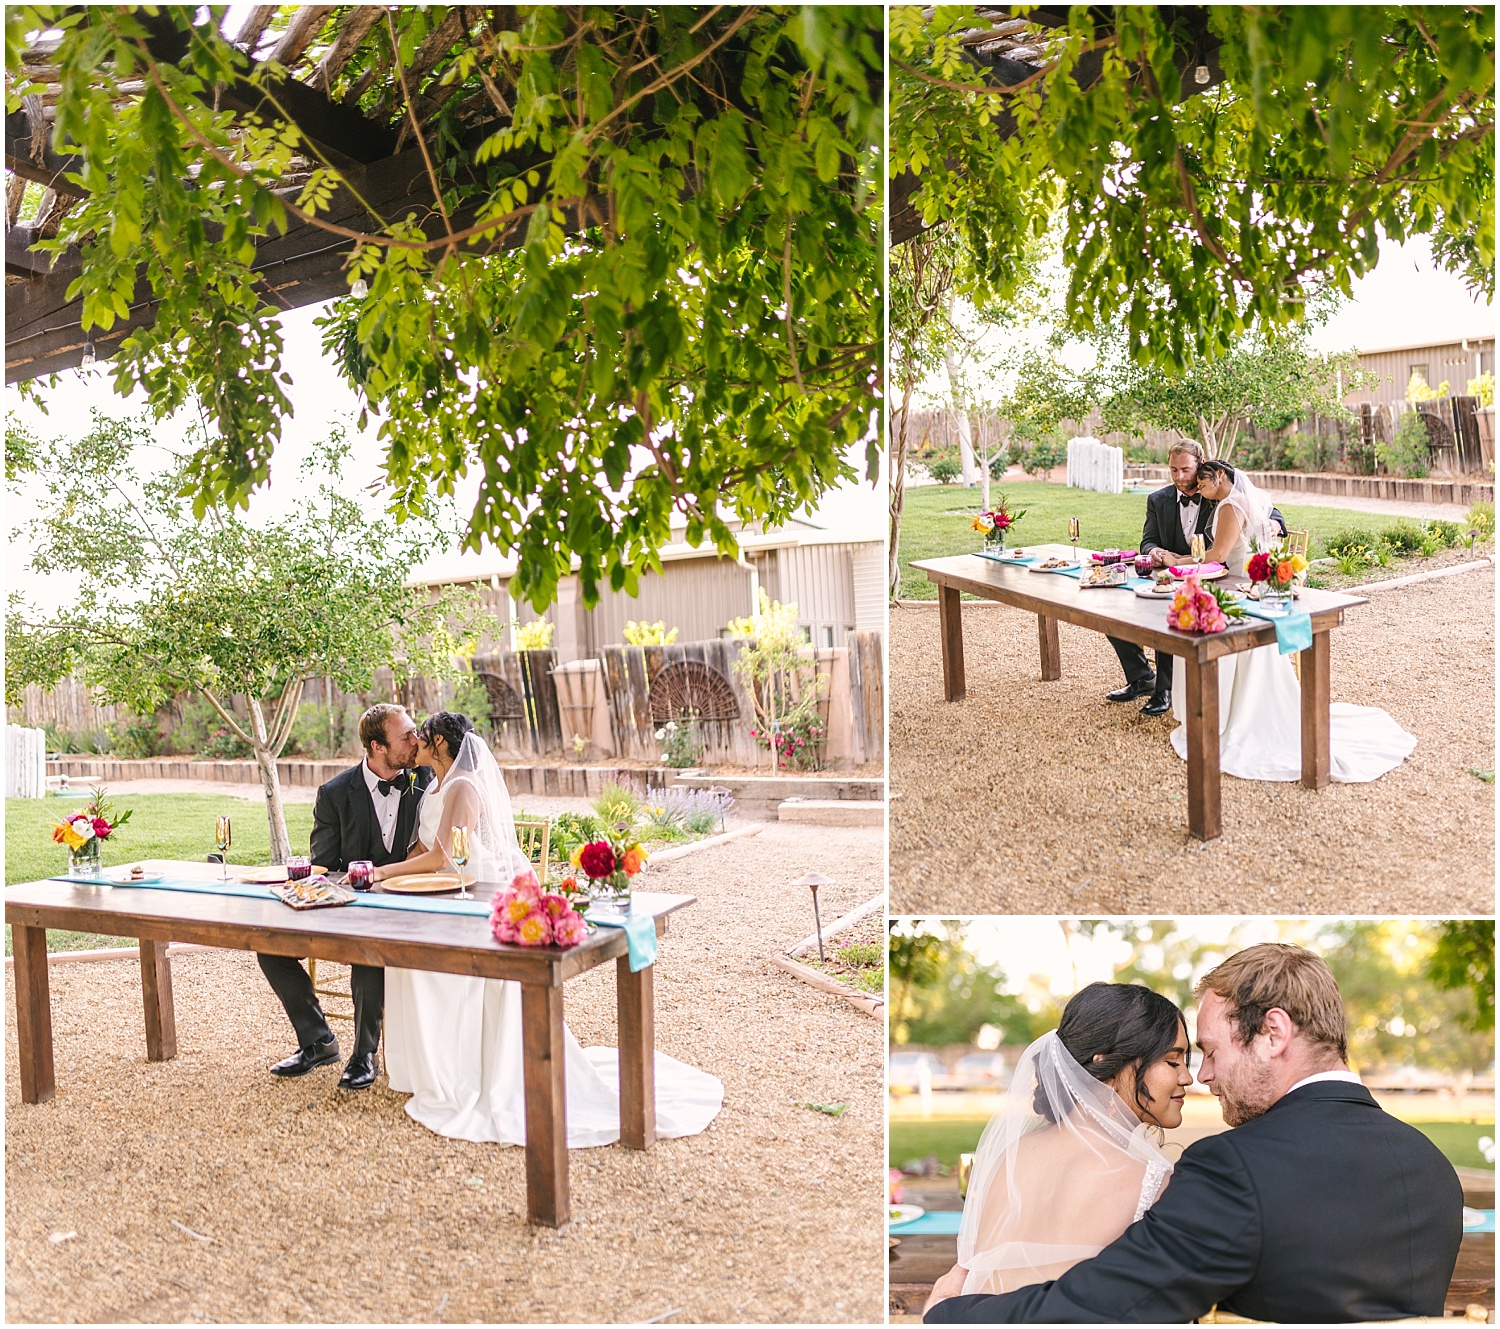 Sweetheart table under greenery at Casa Perea Art Space wedding venue